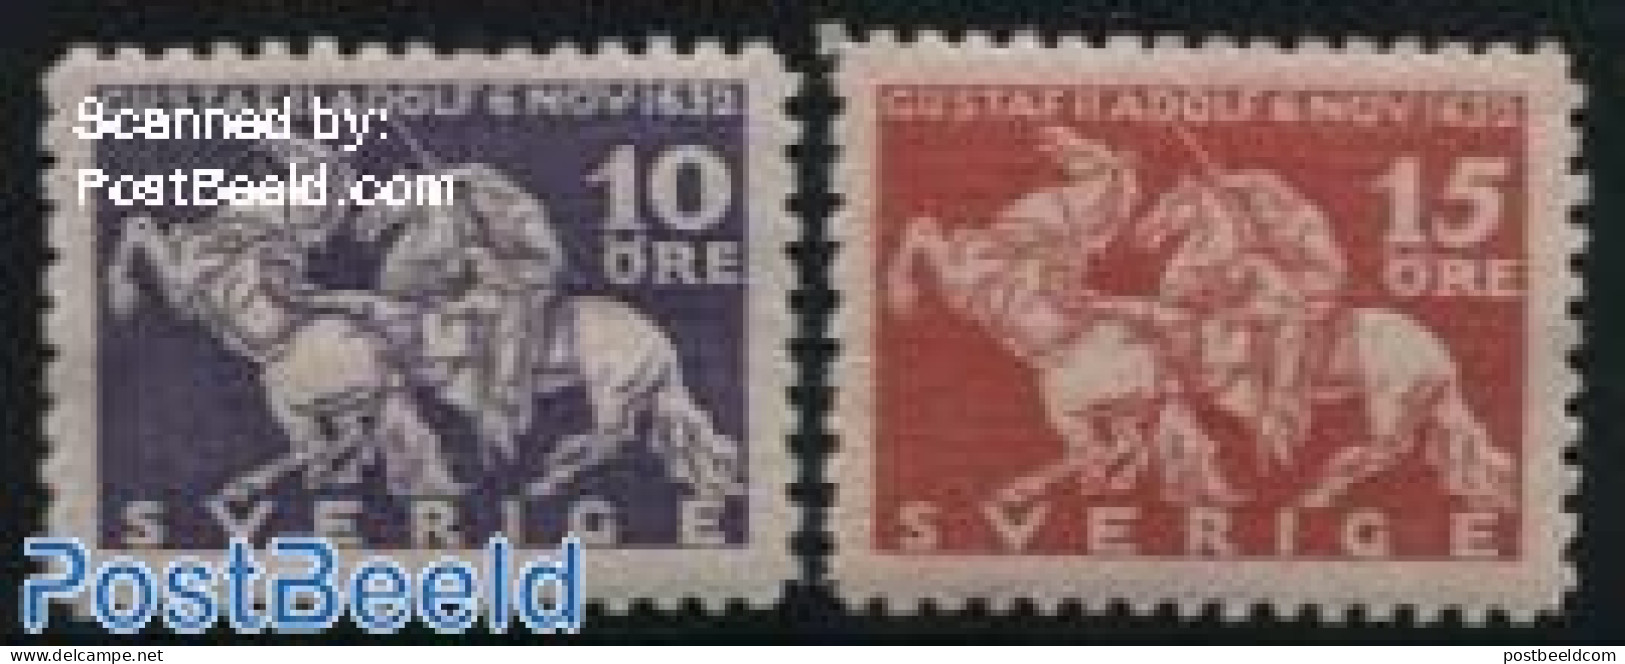 Sweden 1932 Death Of King Gustaf II 2v, All Sides Perforated, Unused (hinged), Nature - Horses - Nuovi